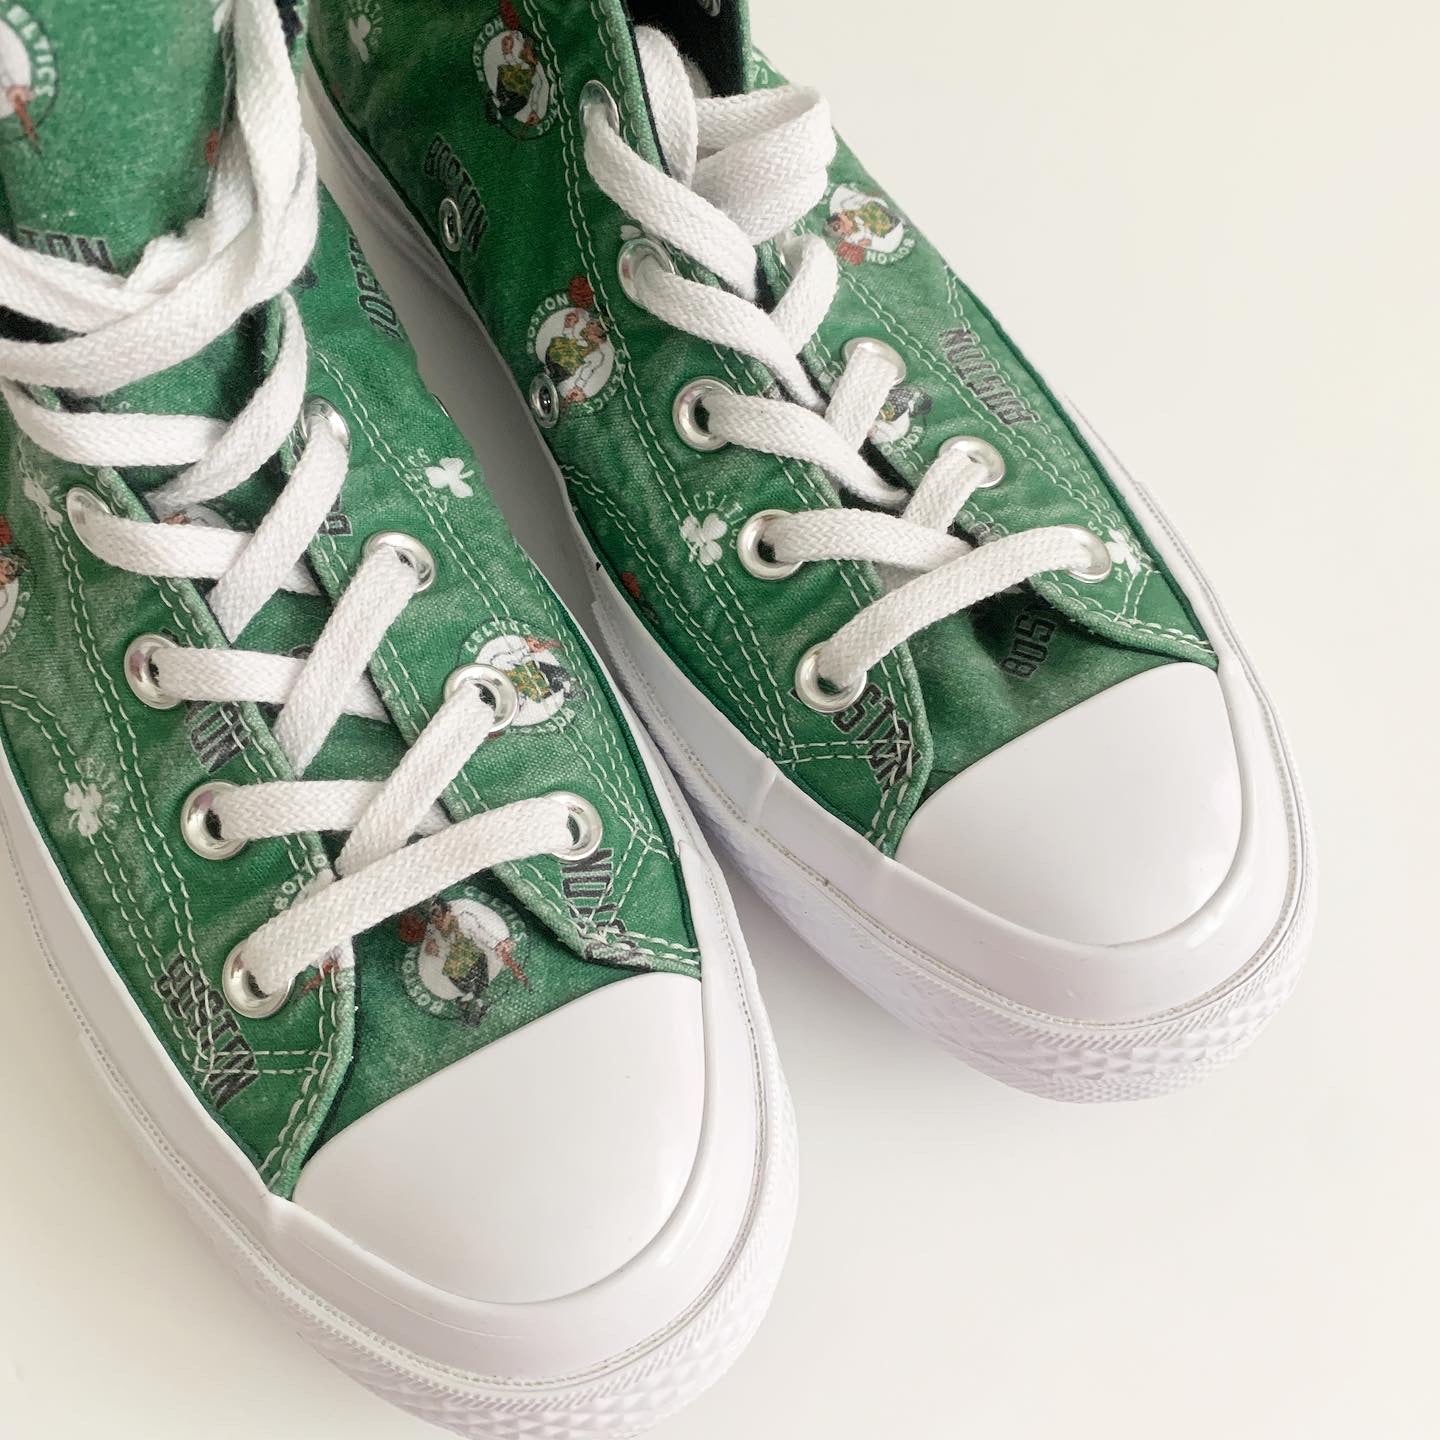 Converse Chuck Taylor Boston Celtics High-Top Sneakers Size 6 Men's 8 Women's Green